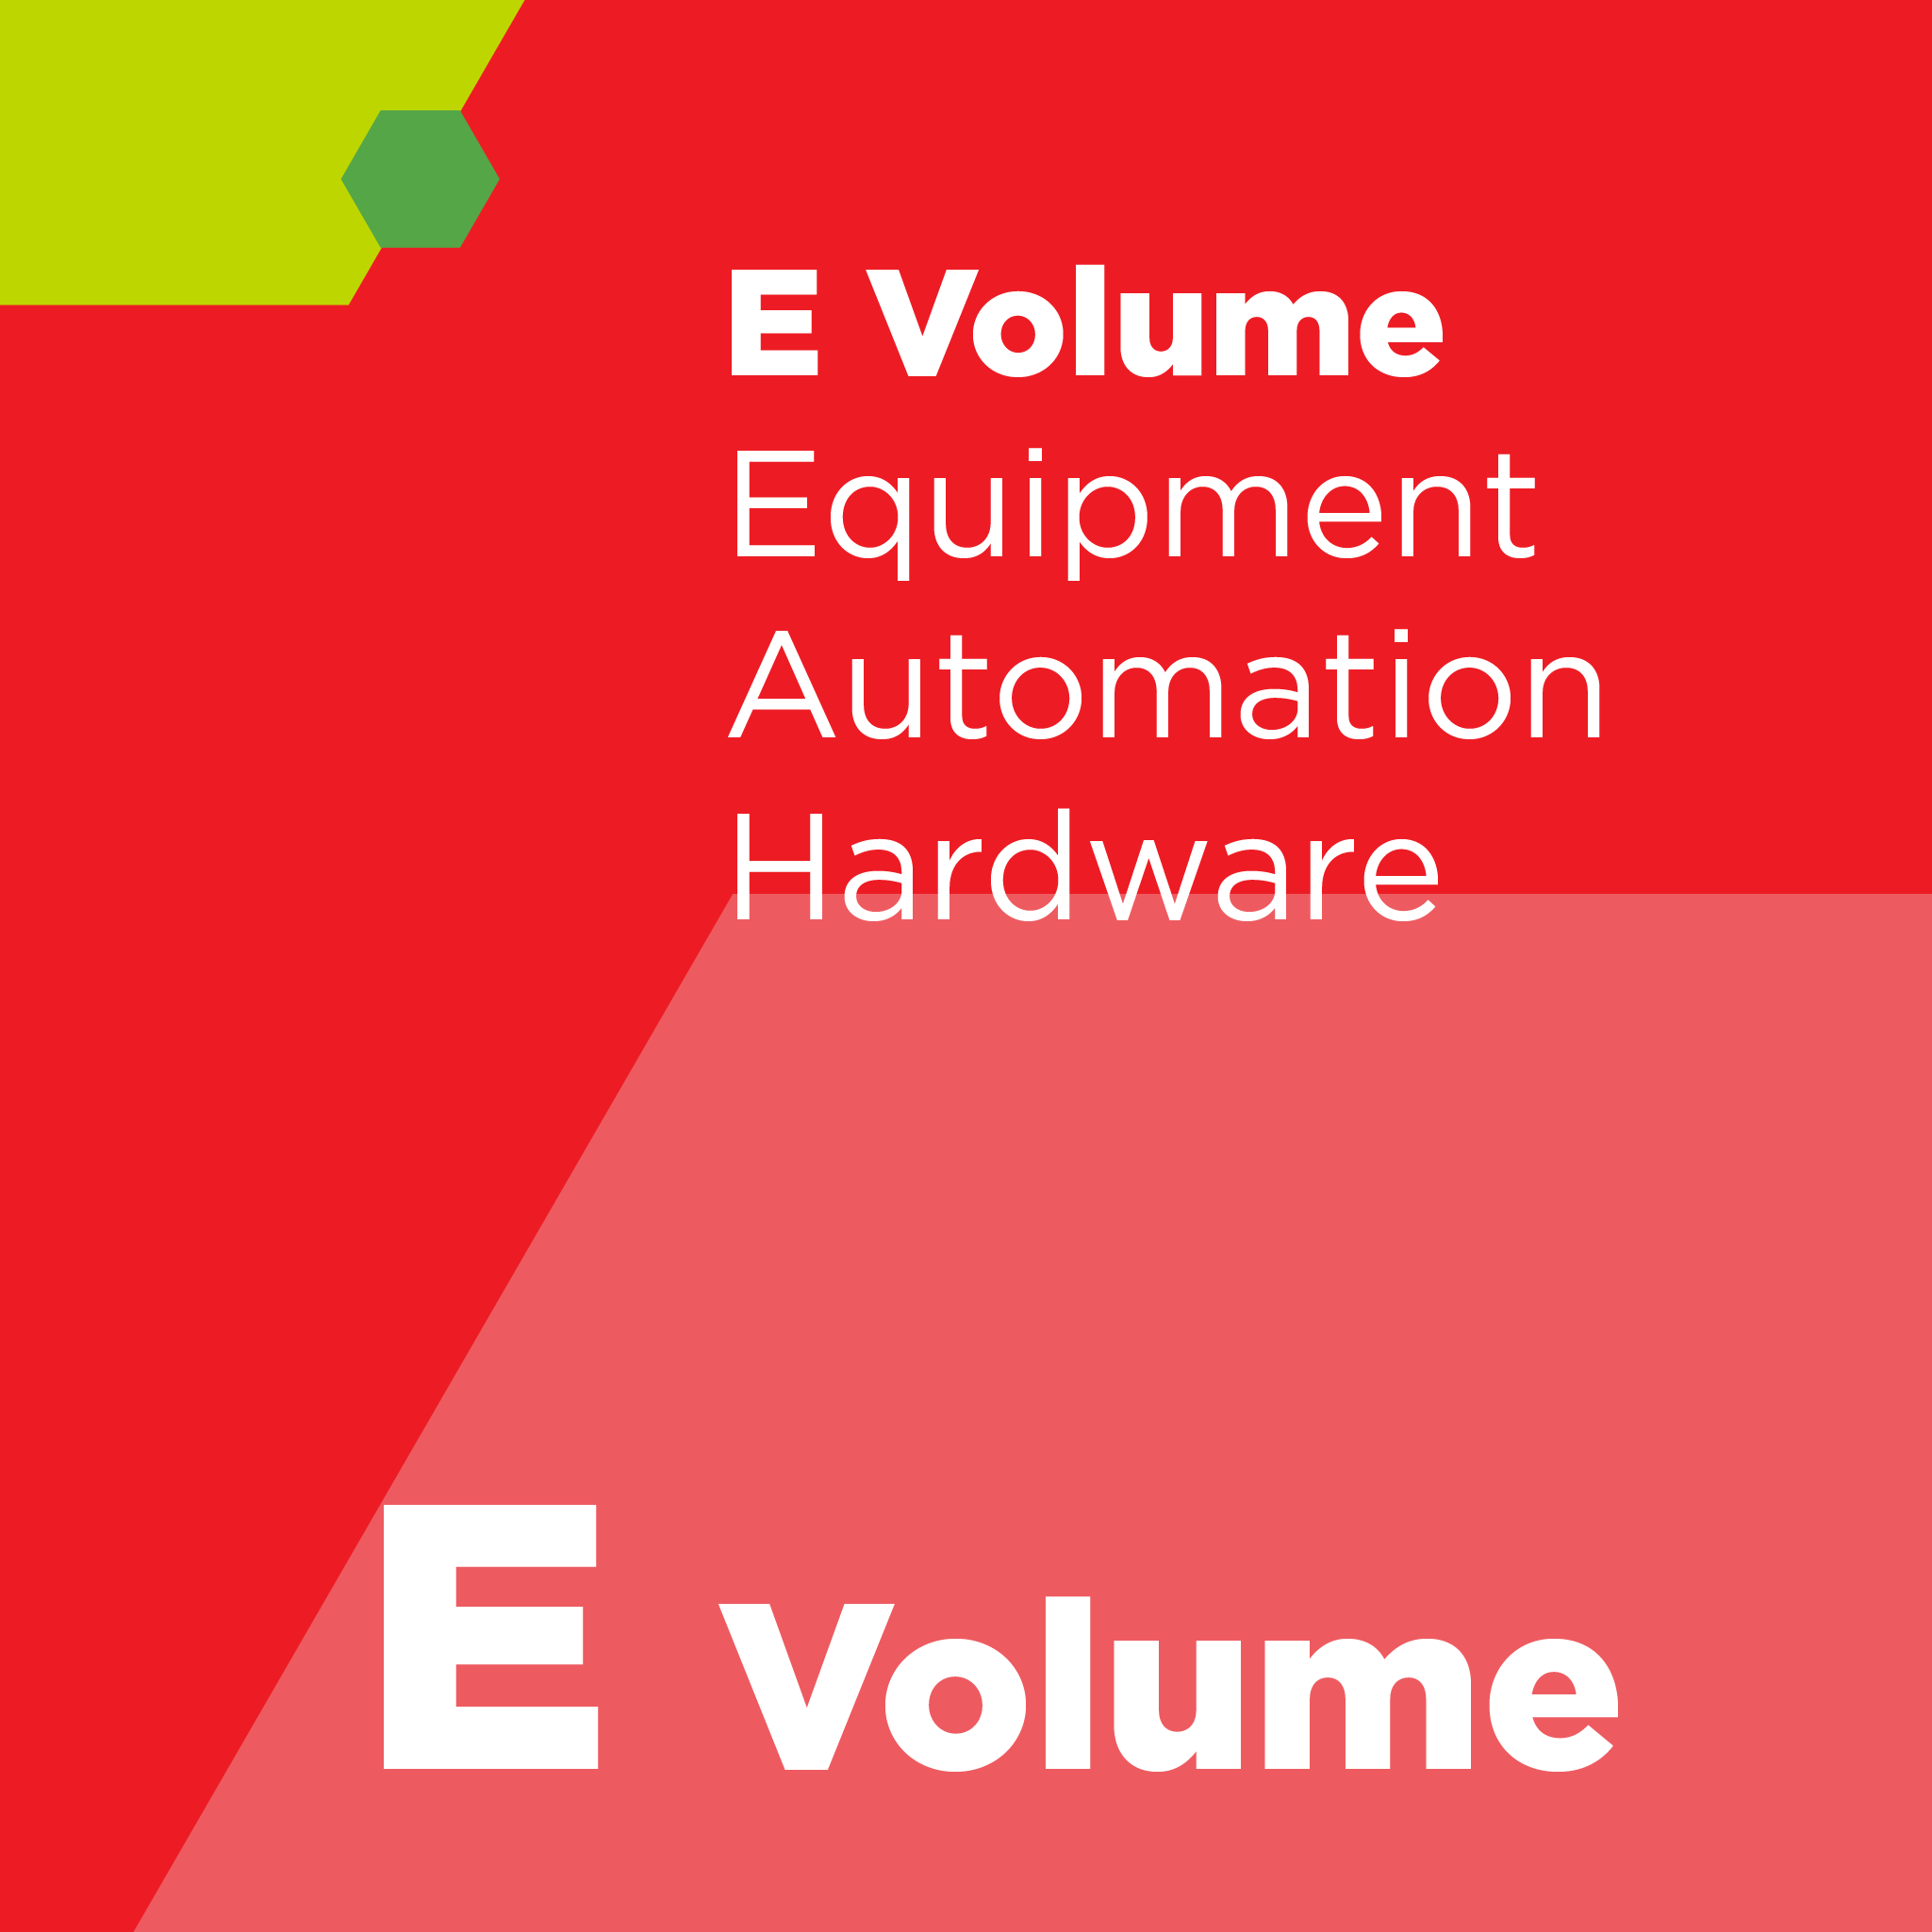 E07900 - SEMI E79 - Specification for Definition and Measurement of Equipment Productivity